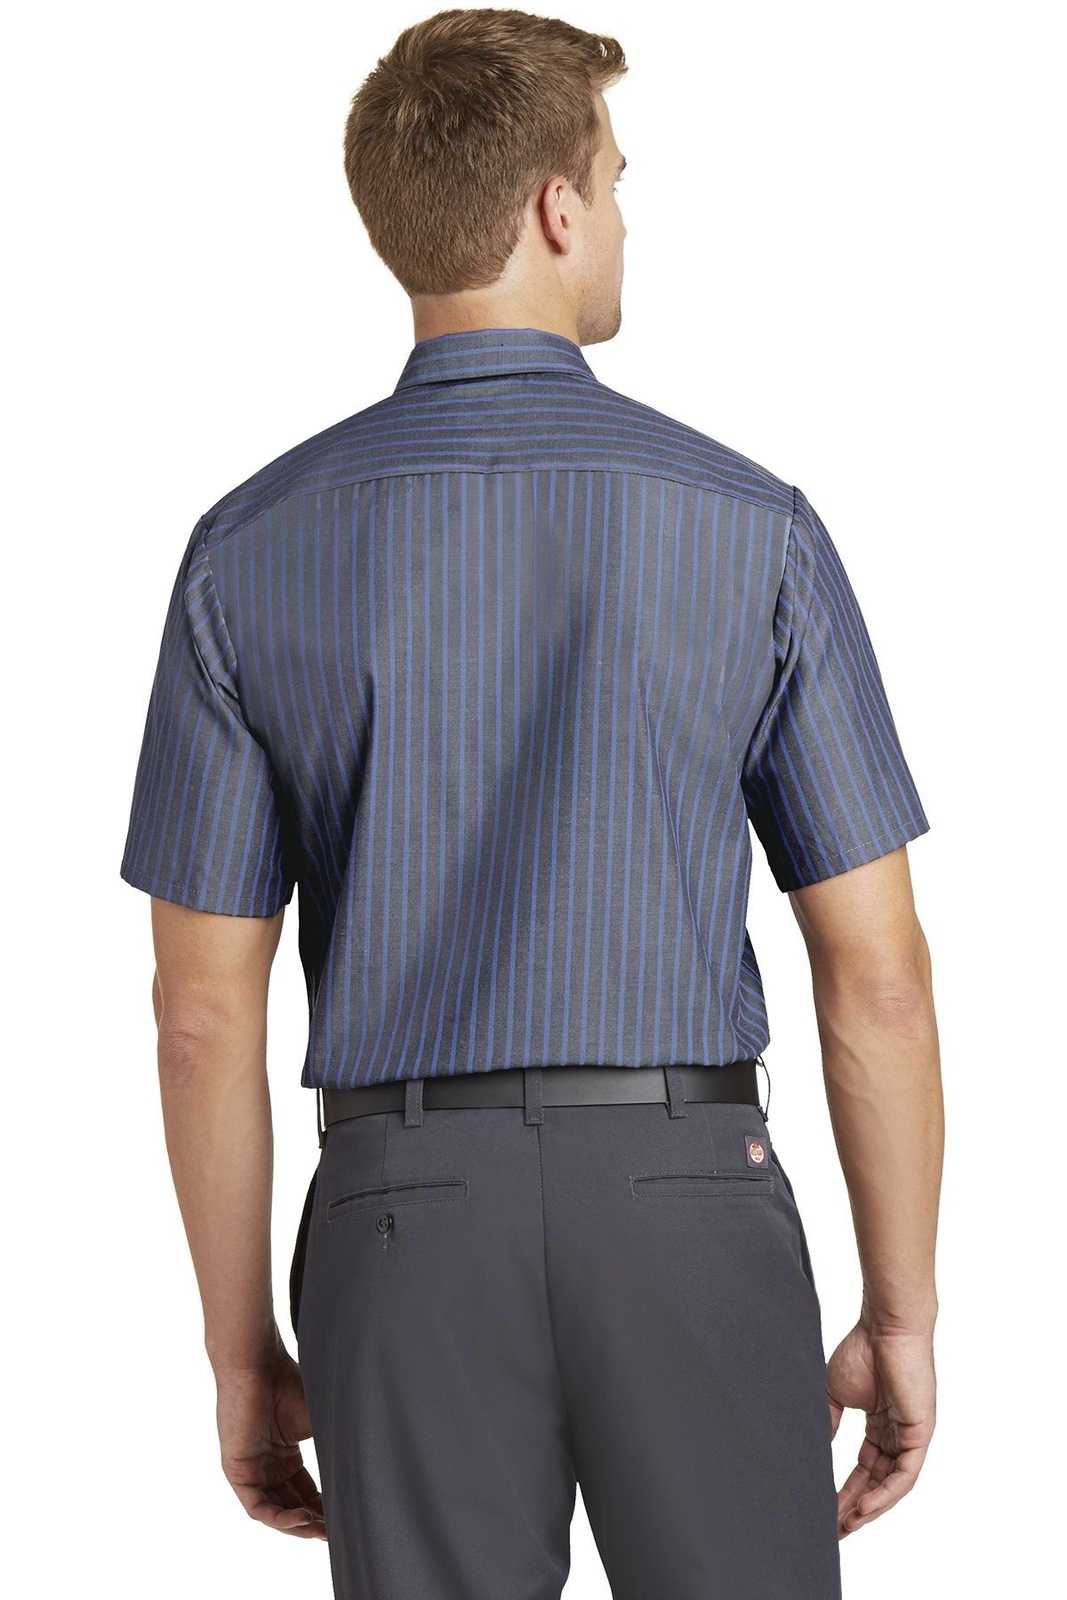 Red Kap CS20LONG Red Kap Long Size, Short Sleeve Striped Industrial Work Shirt - Gray/ Blue - HIT a Double - 1